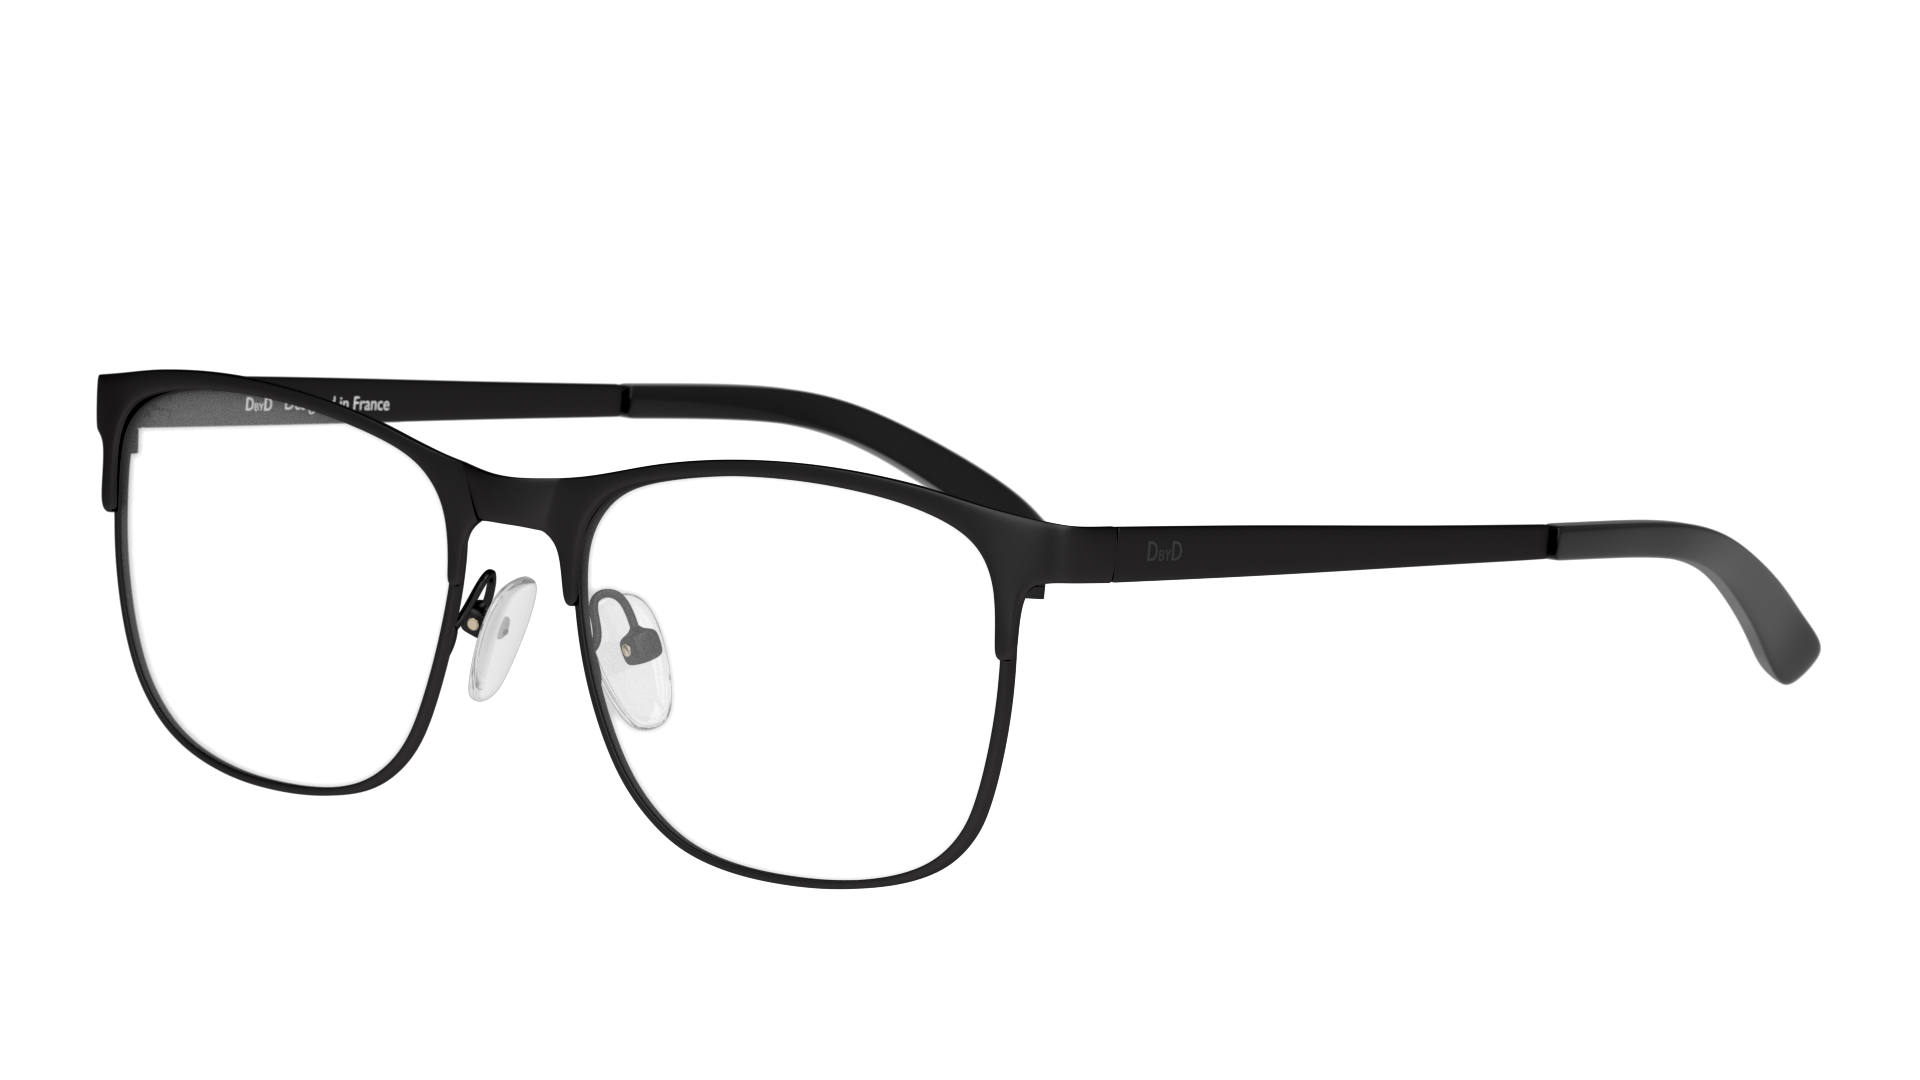 Angle_Left01 DbyD Essentials DB OM0001 Glasses Transparent / Black